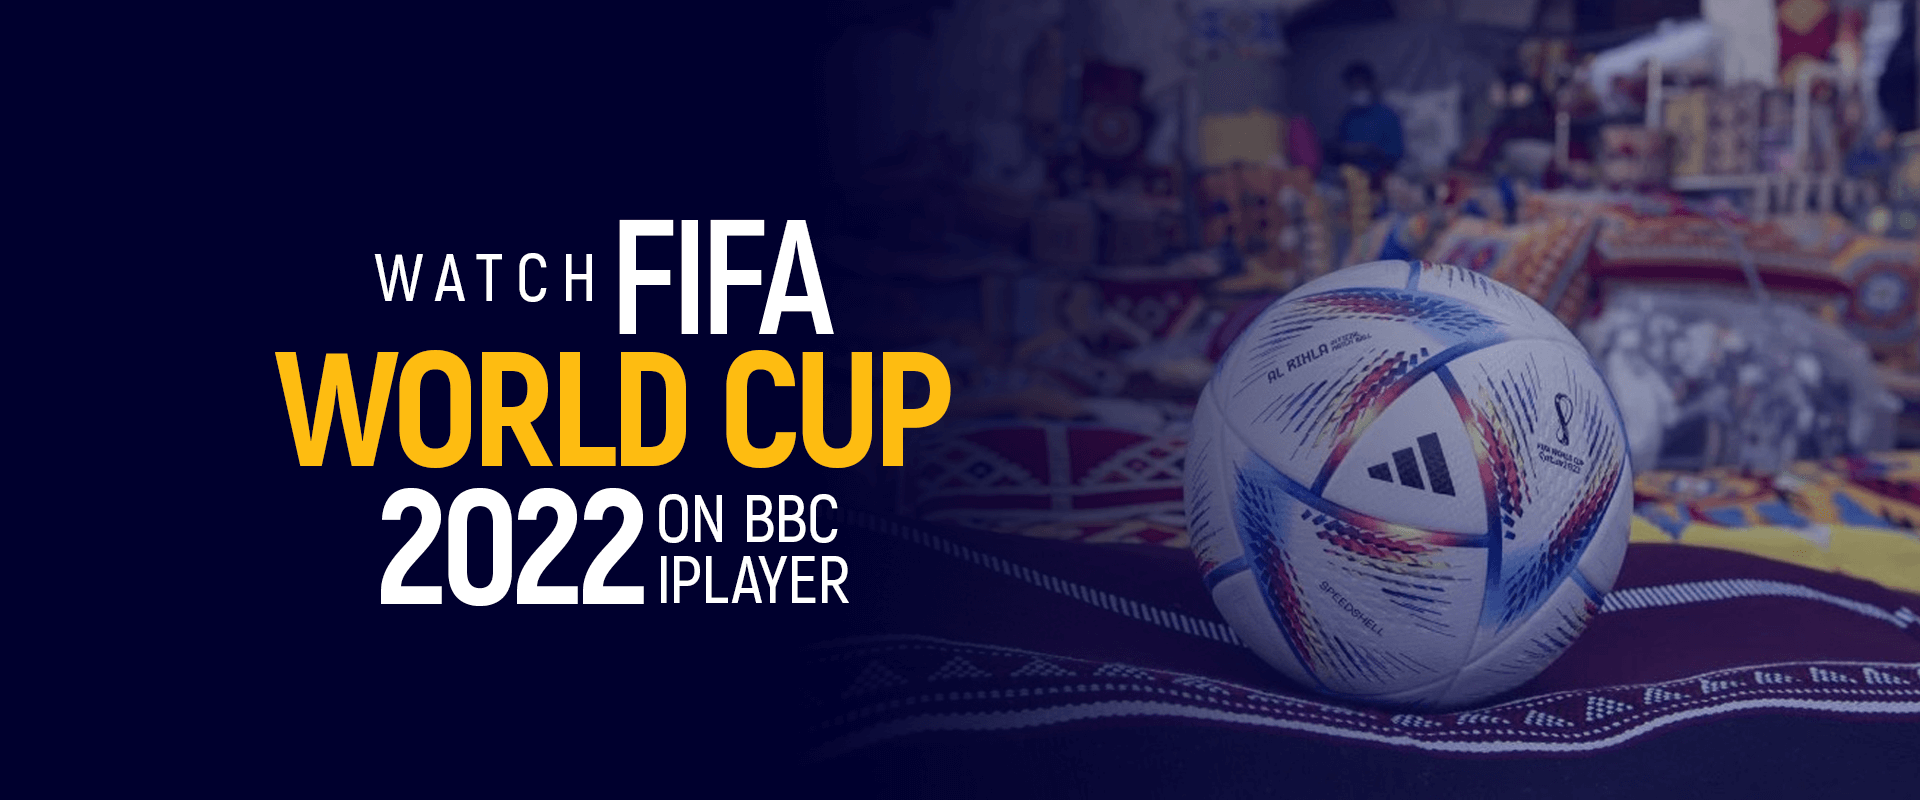 bbc watch world cup